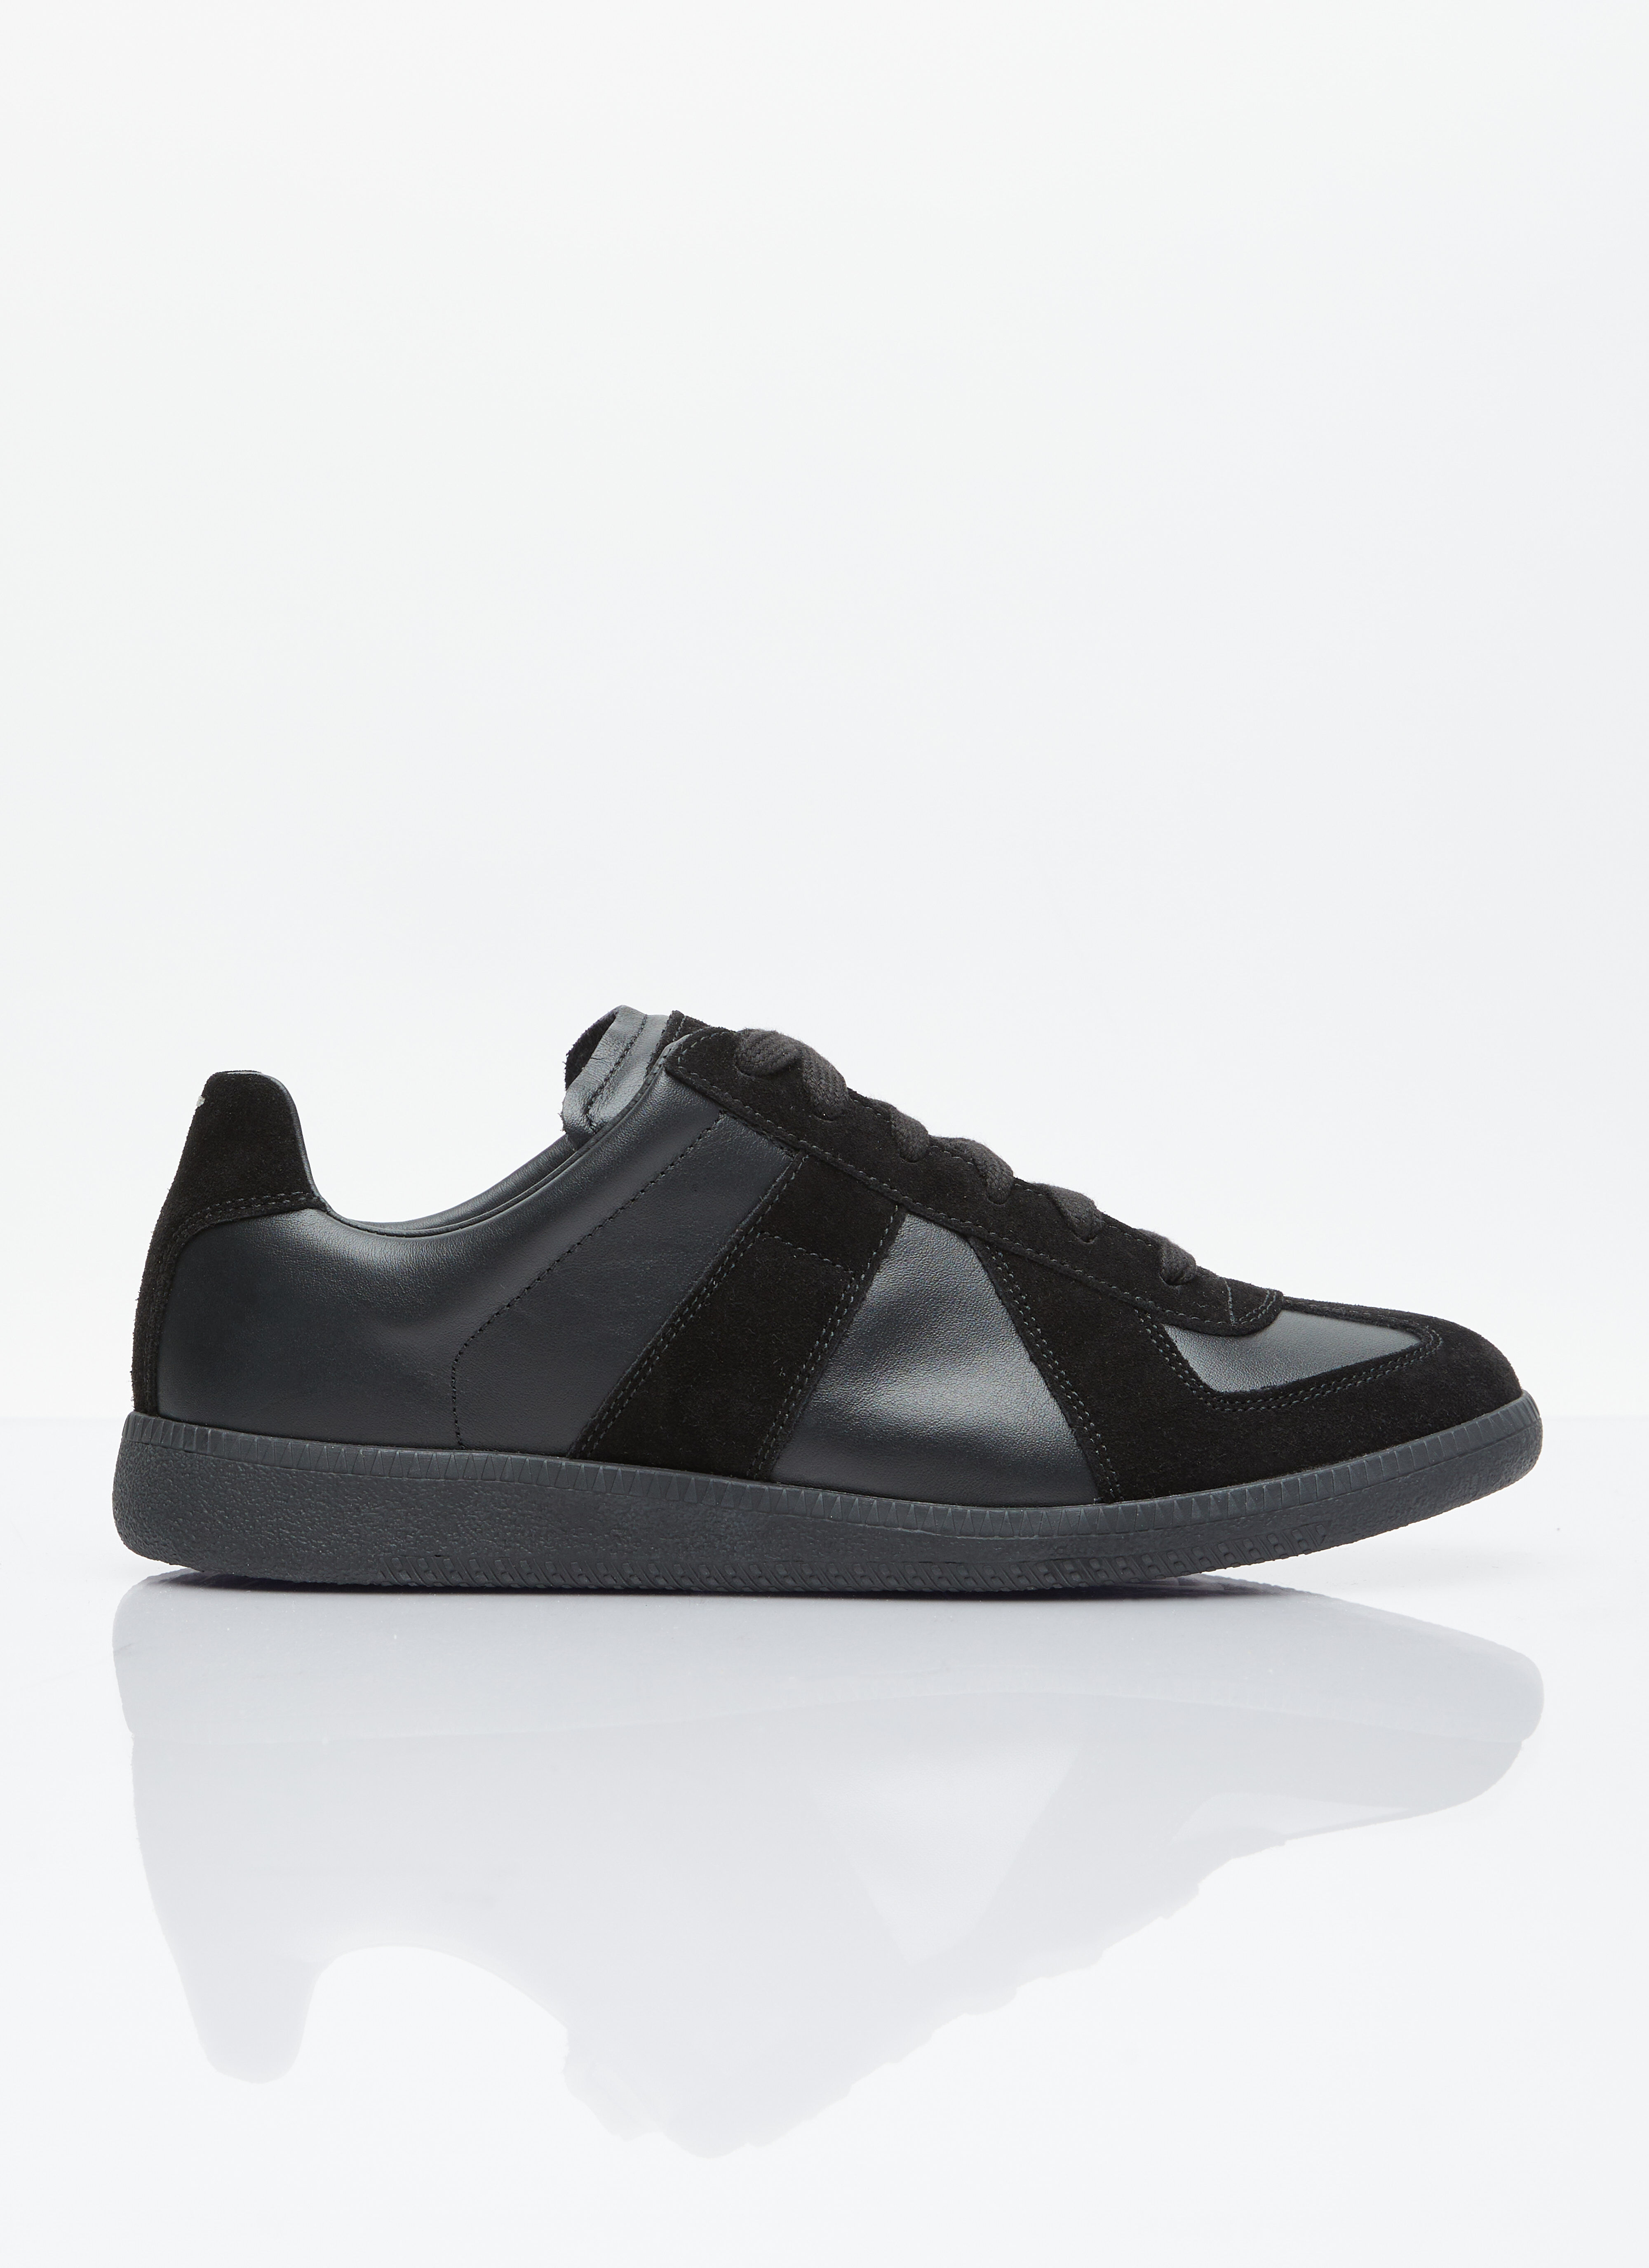 Saint Laurent Replica Sneakers Black sla0145025